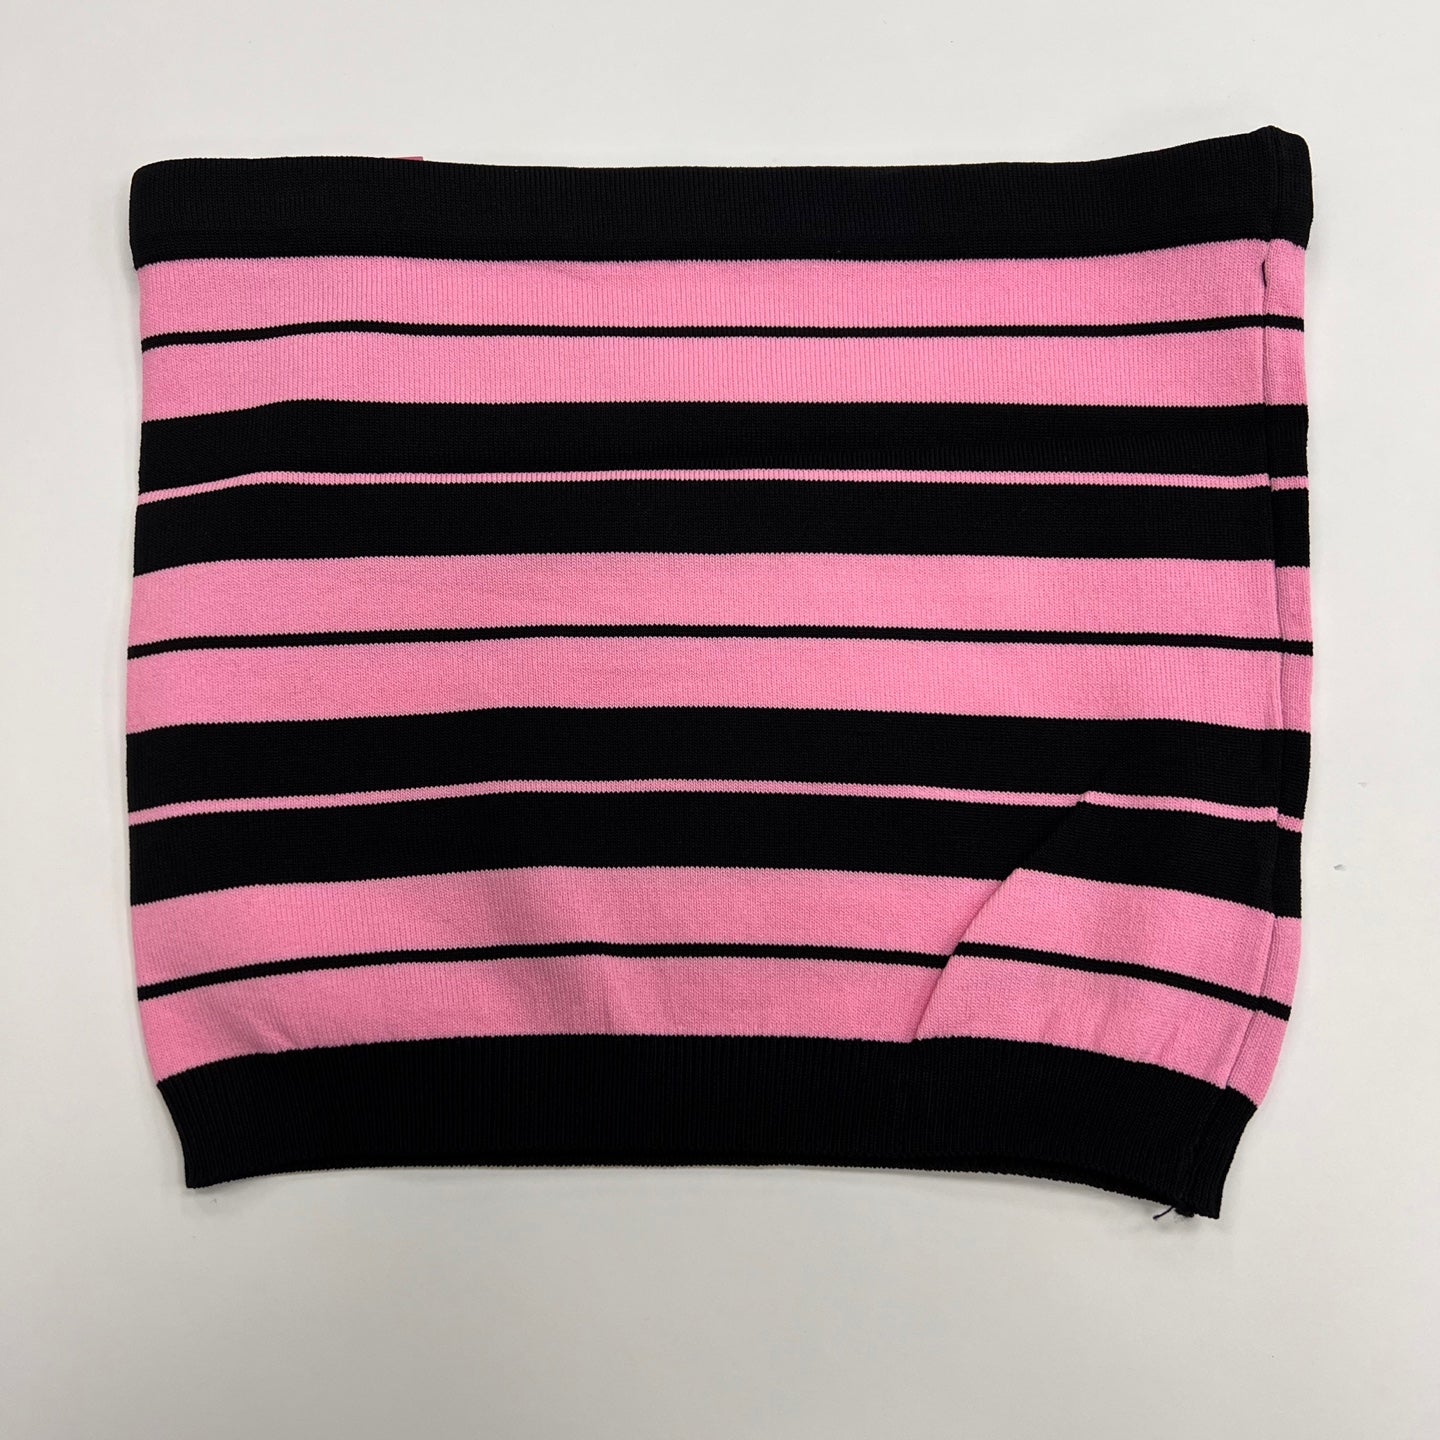 FB COUNTY Women's Knit Tube Top